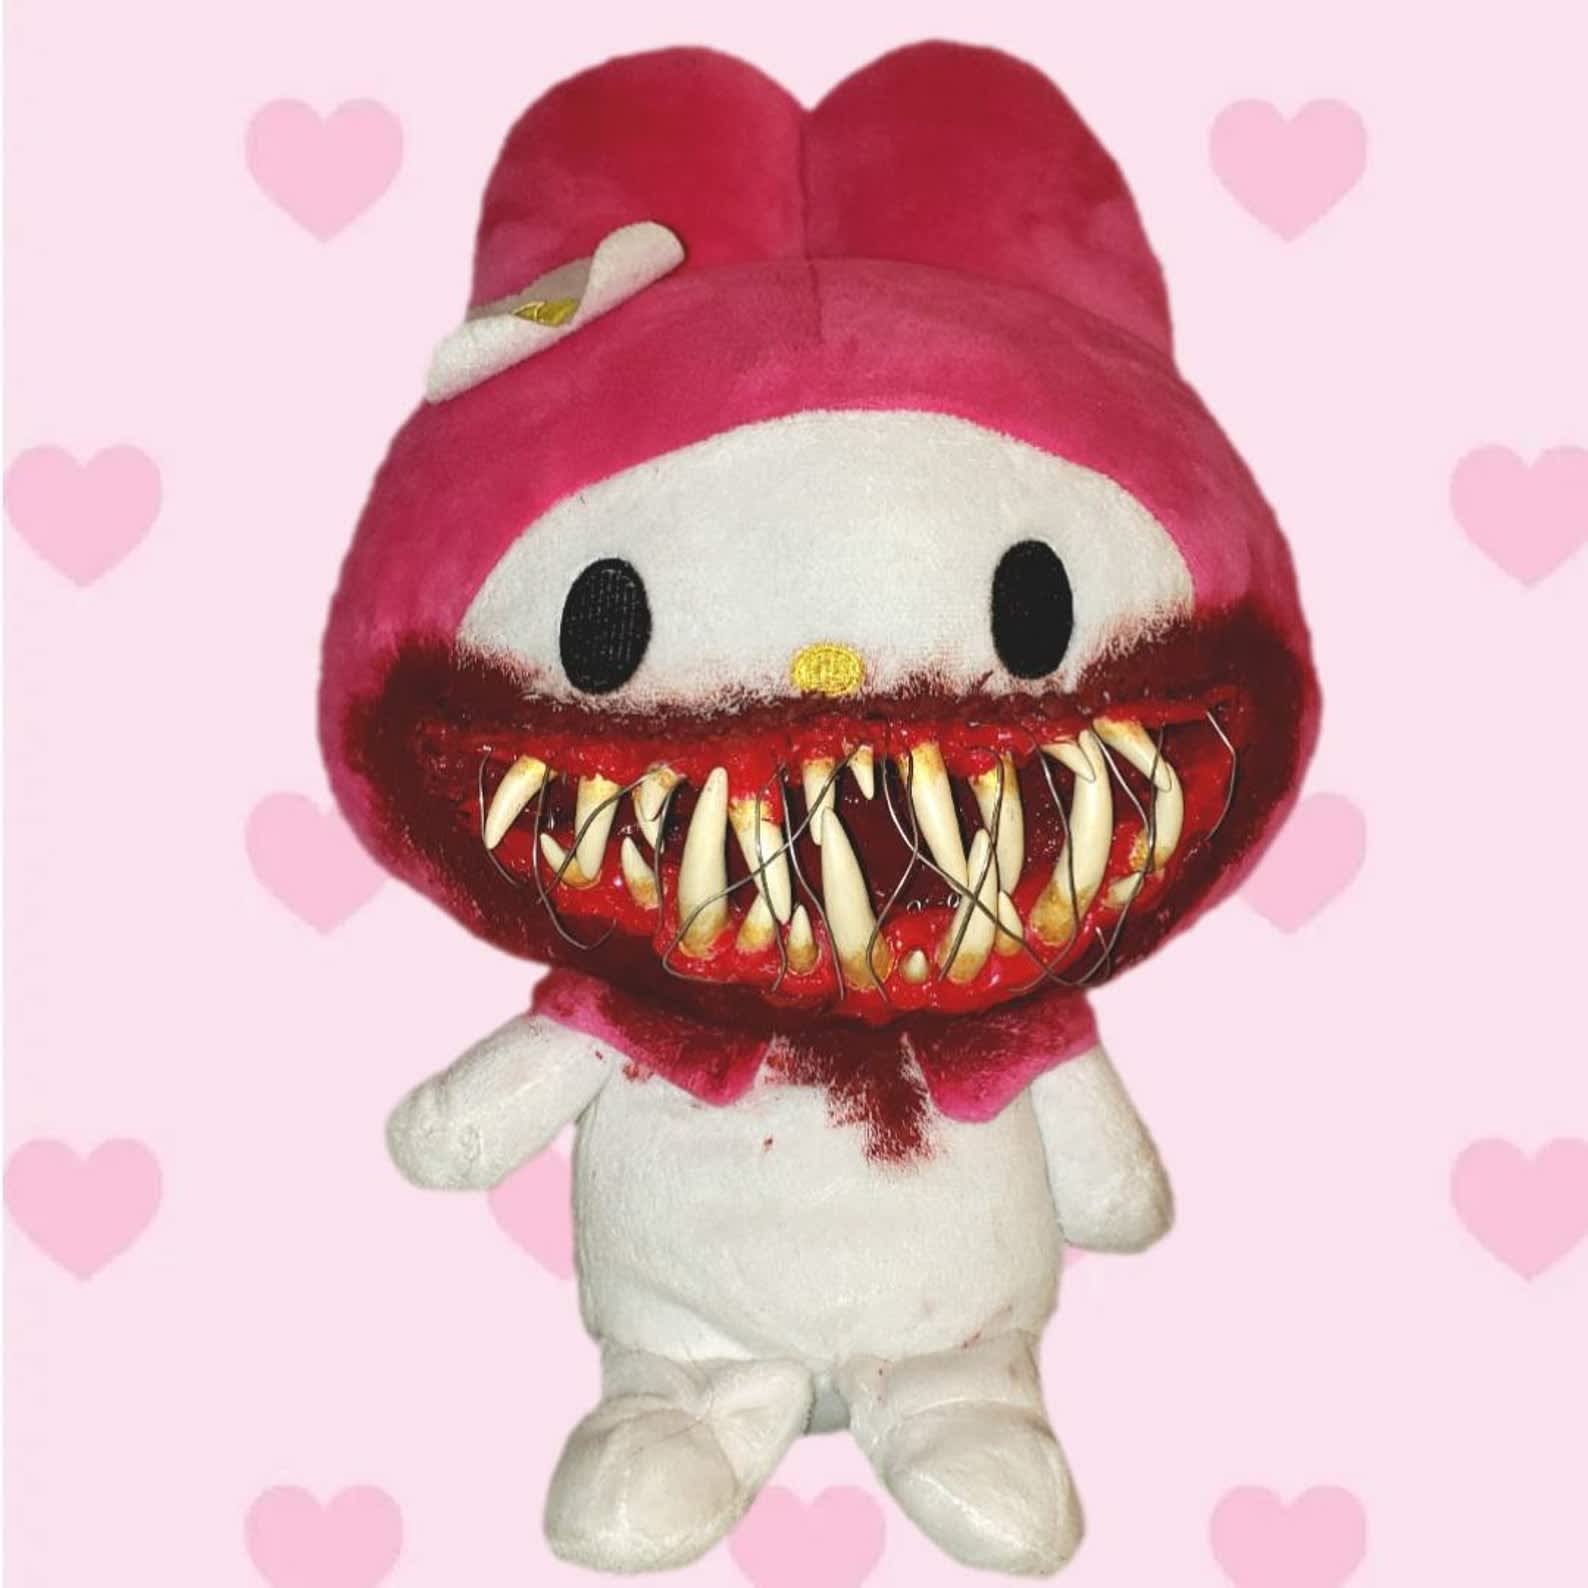 creepy stuffed animals with teeth